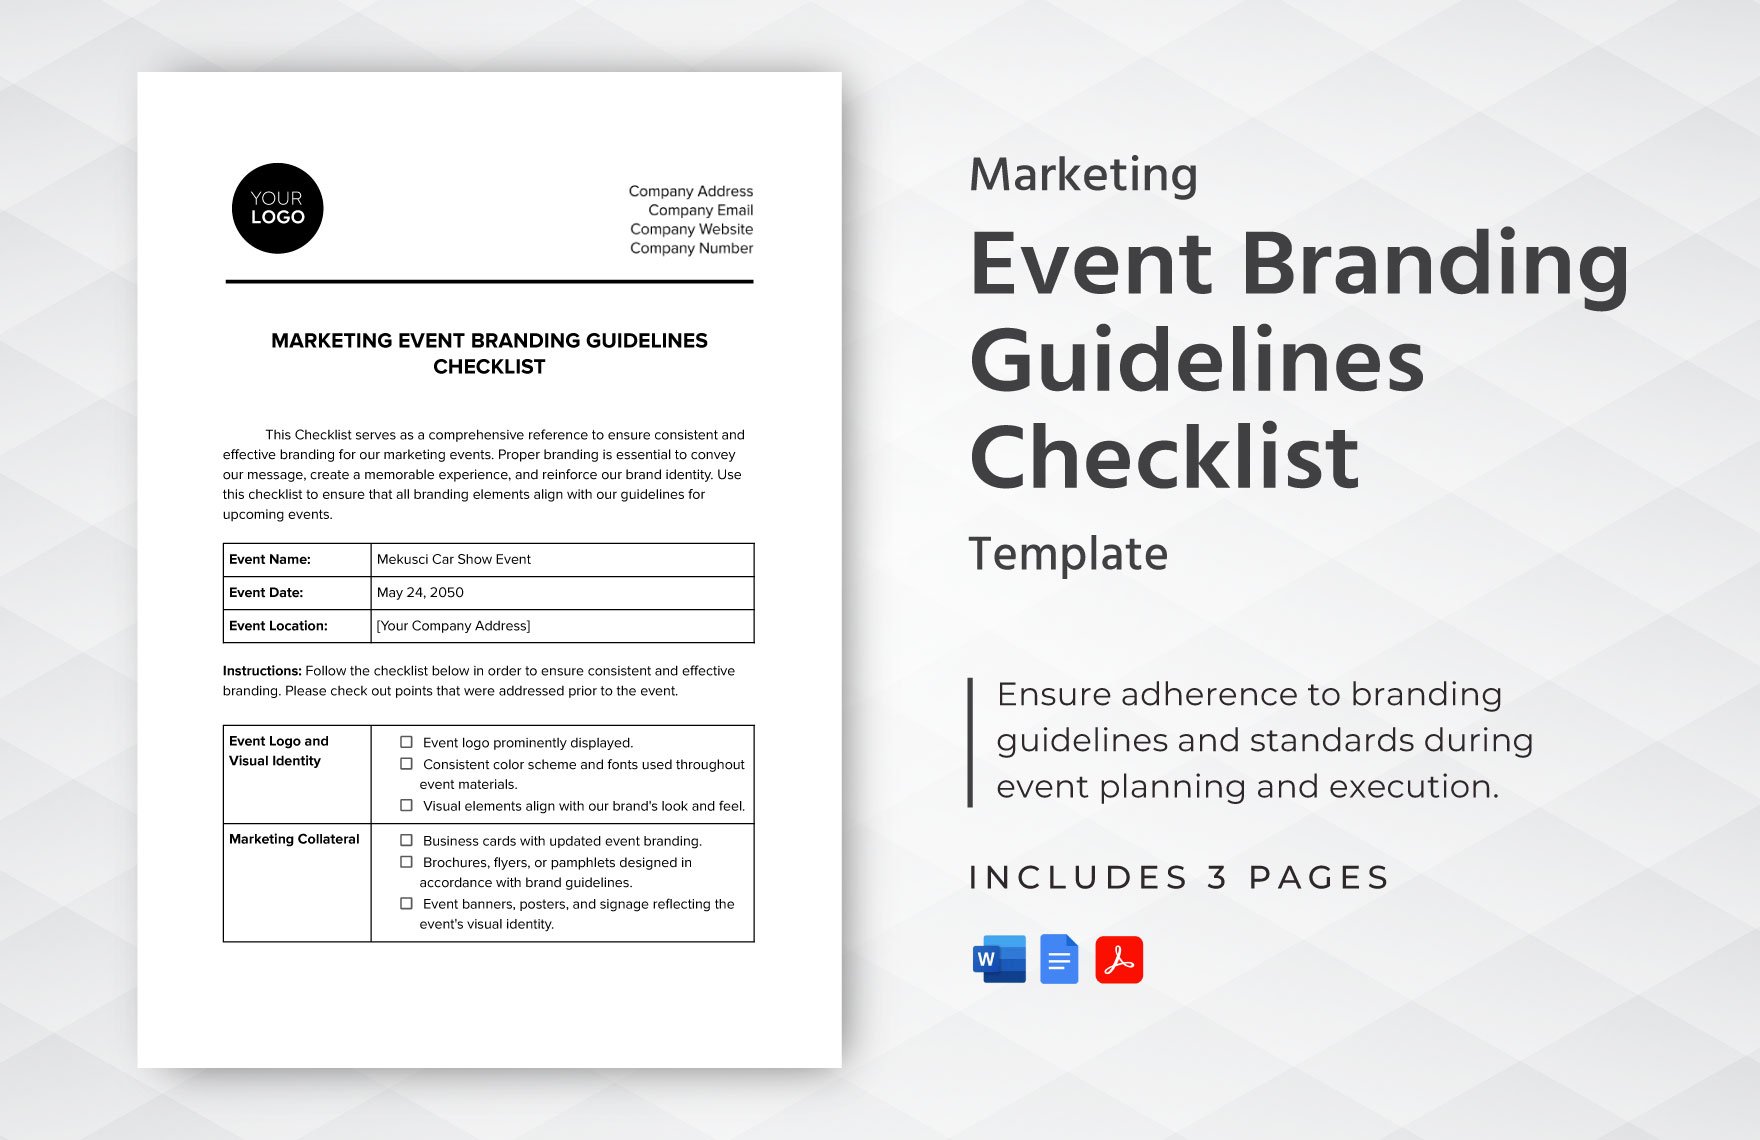 Marketing Event Branding Guidelines Checklist Template